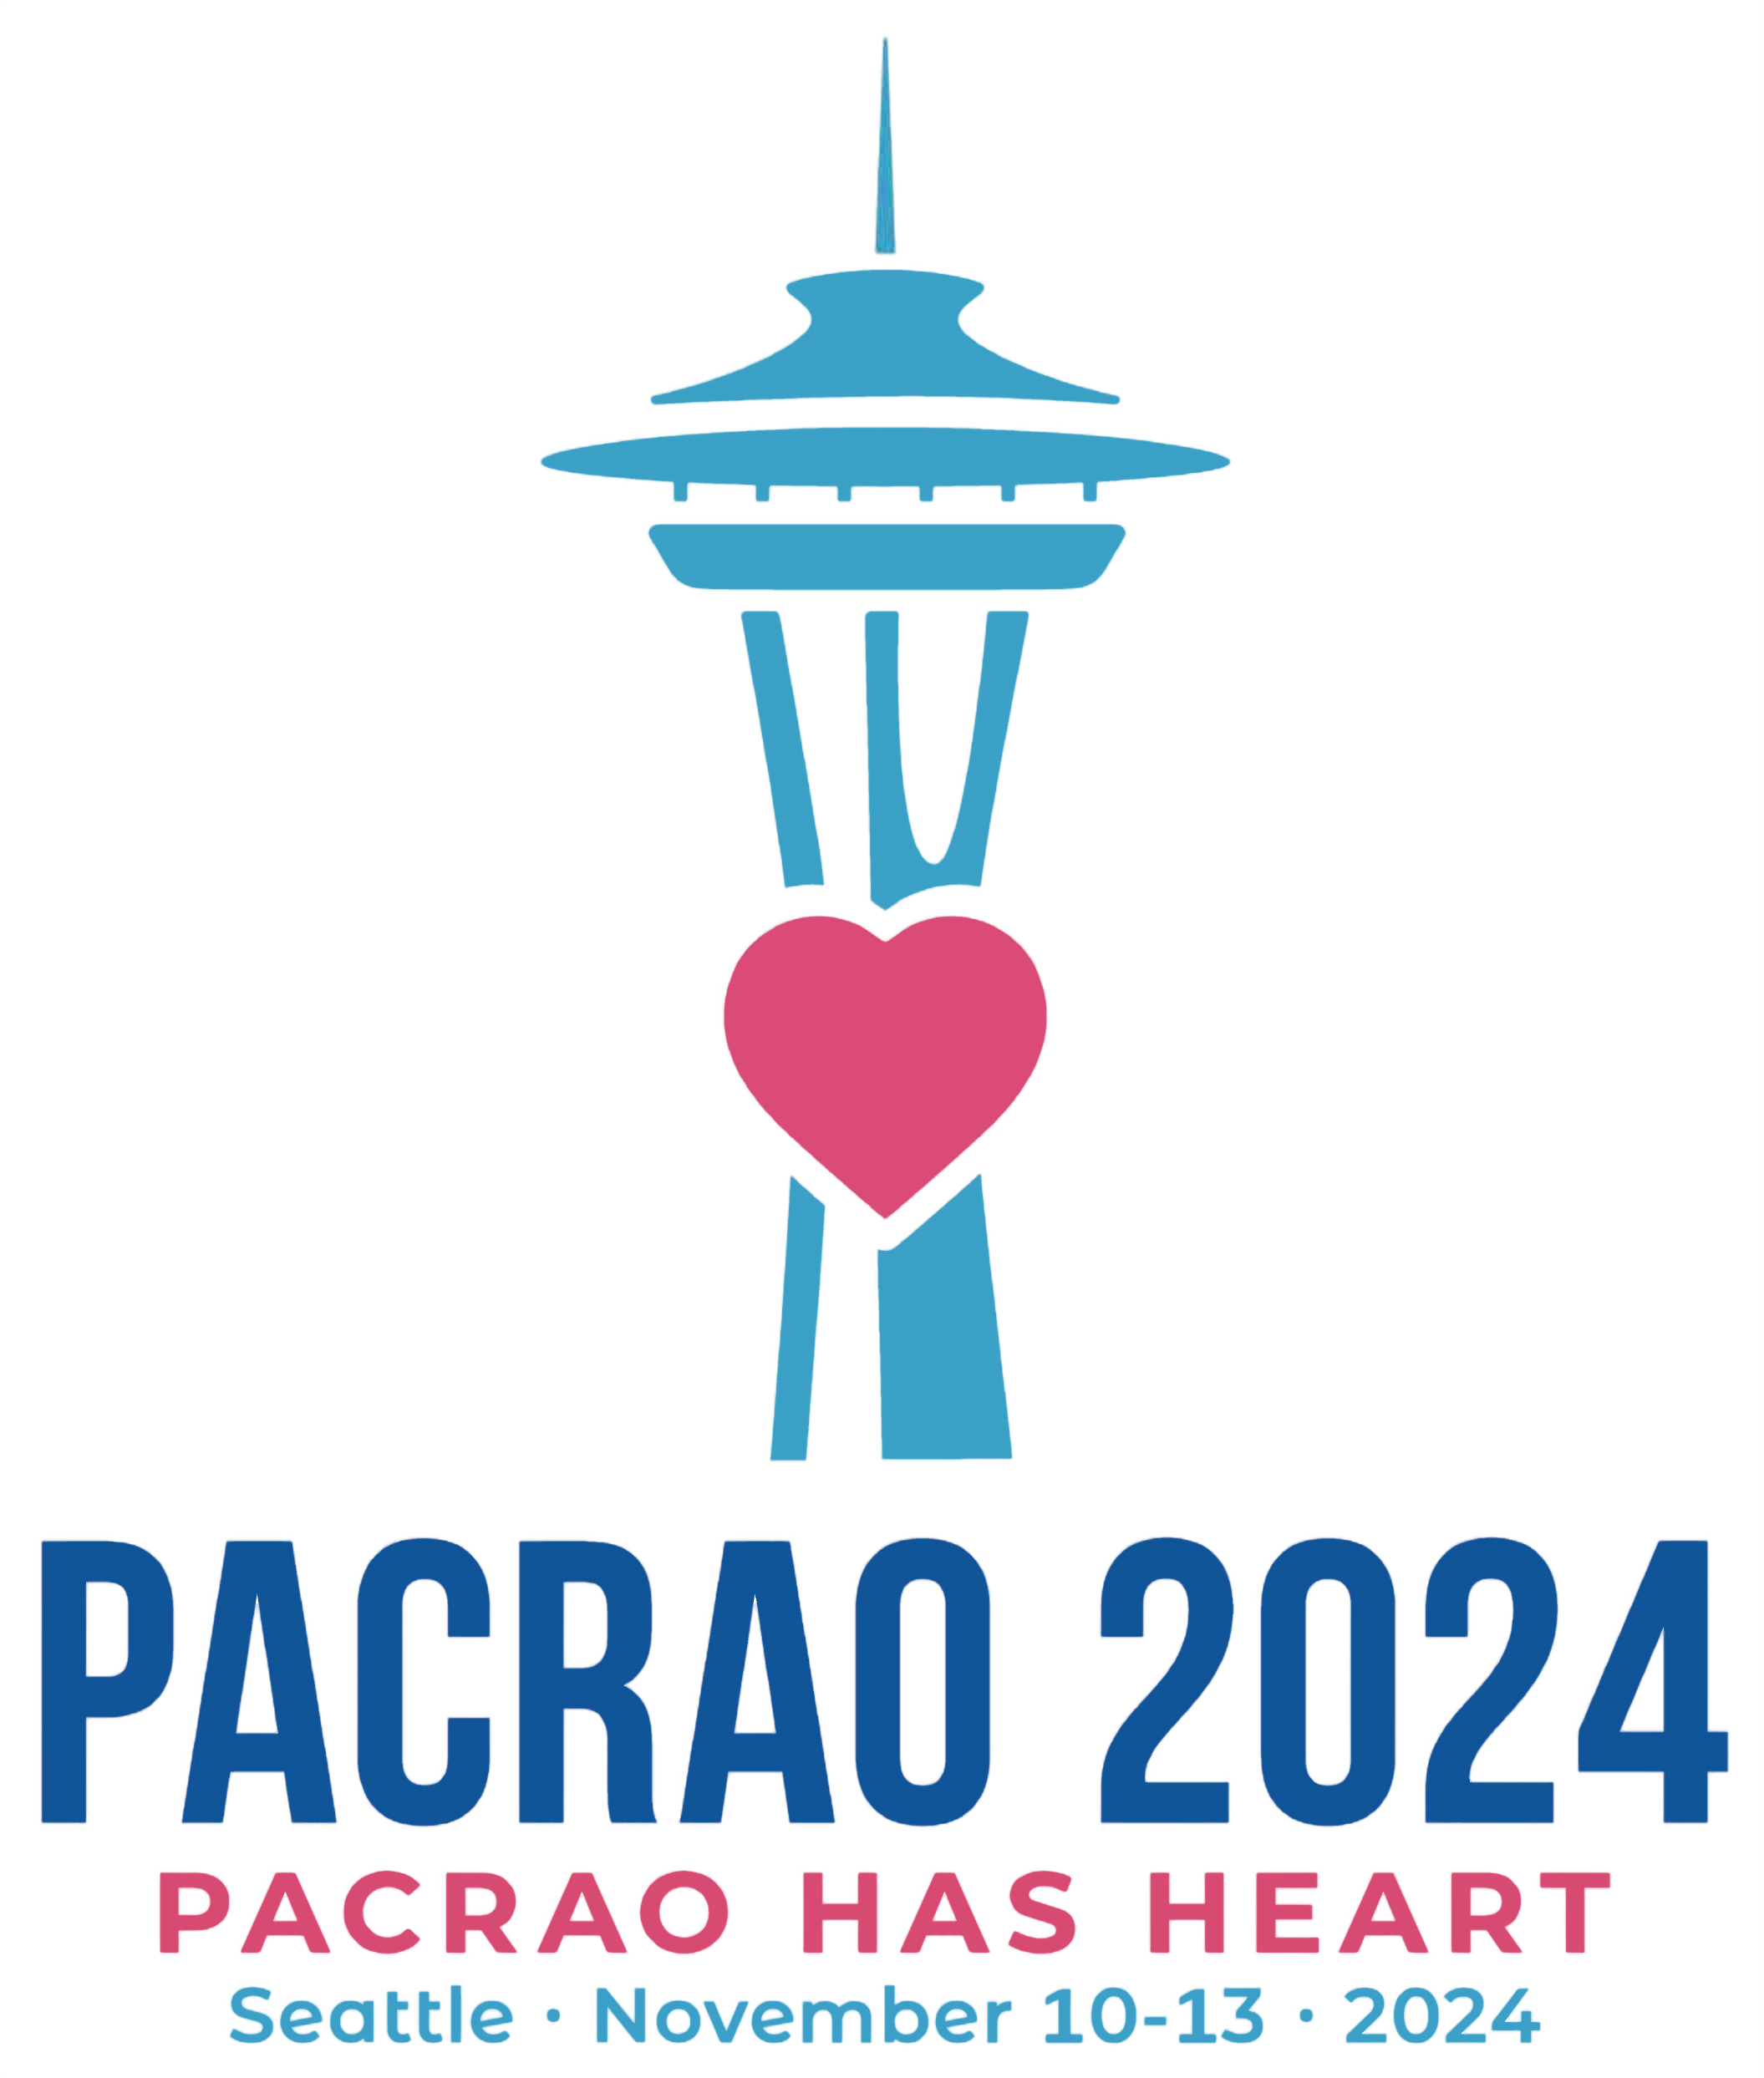 PACRAO 2024 logo